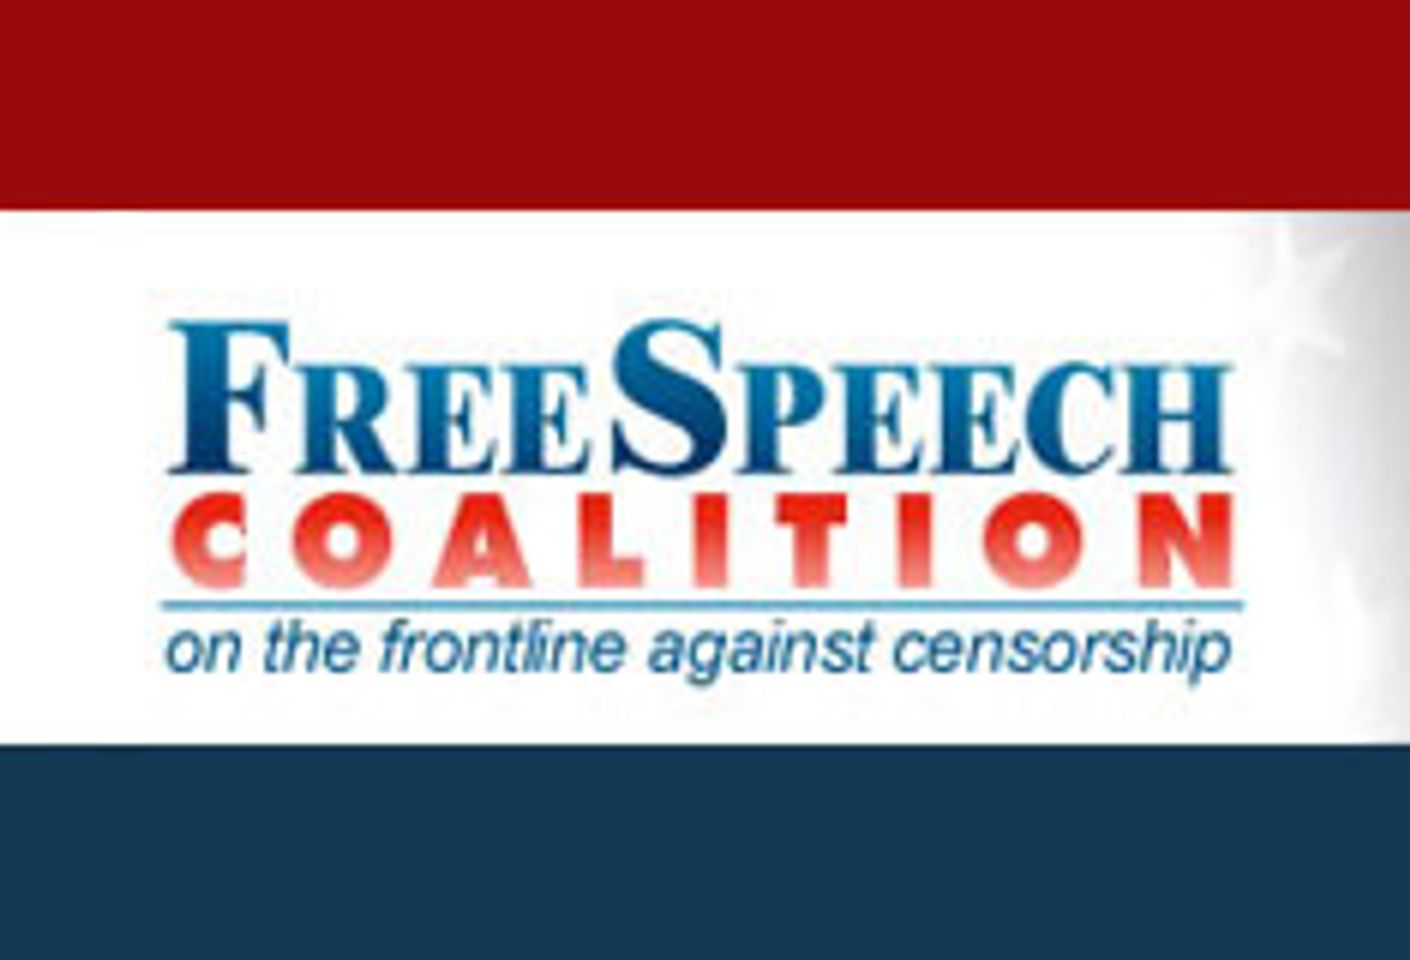 Online Buddies Donates $10,000 to Free Speech Coalition